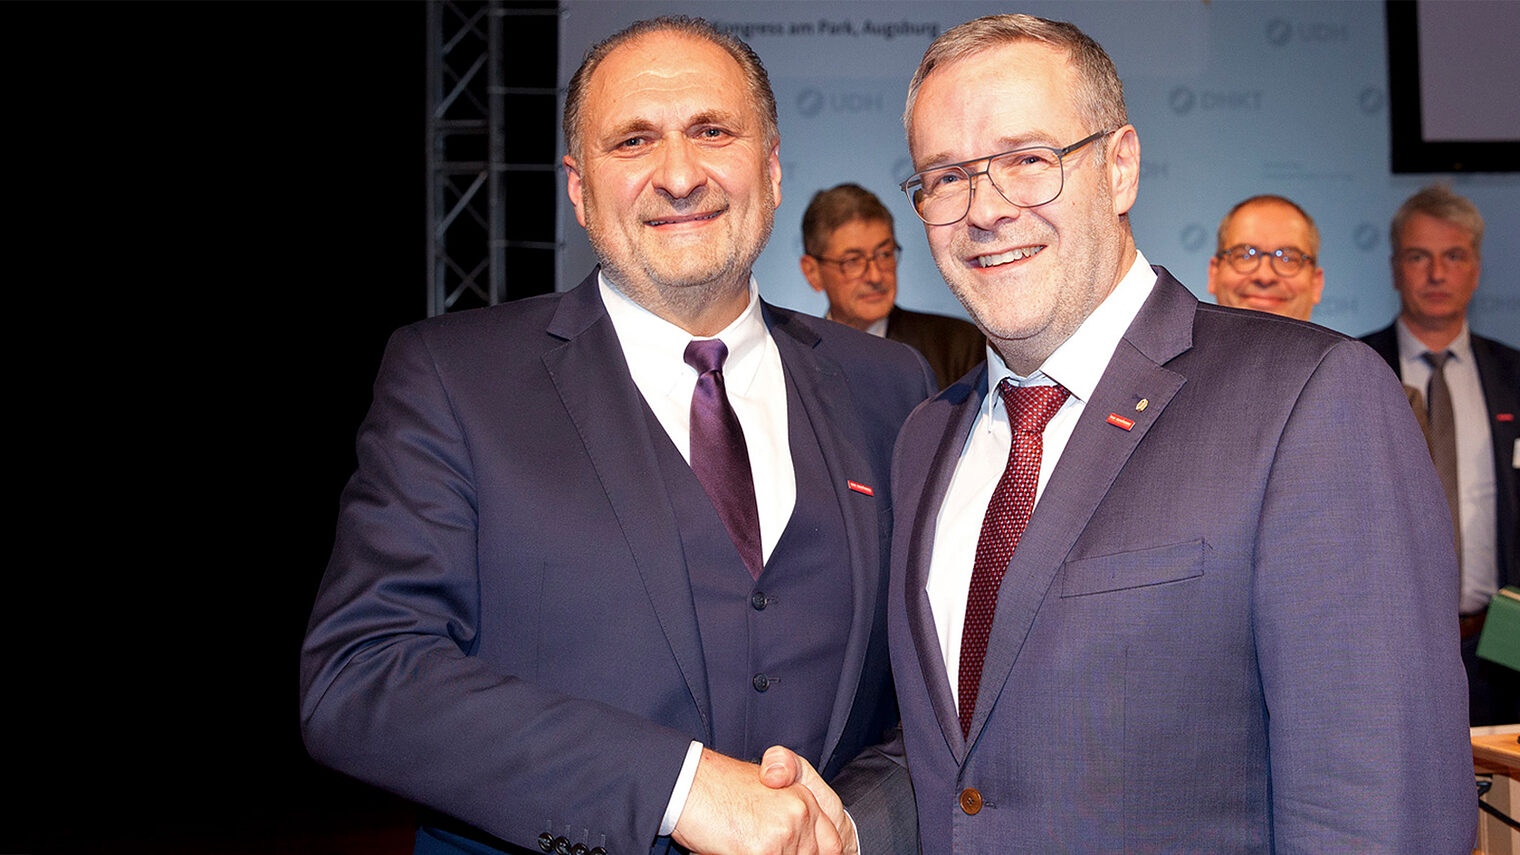 Der scheidende ZDH-Präsident Hans Peter Wollseifer (links) gratuliert seinem Nachfolger Jörg Dittrich. 